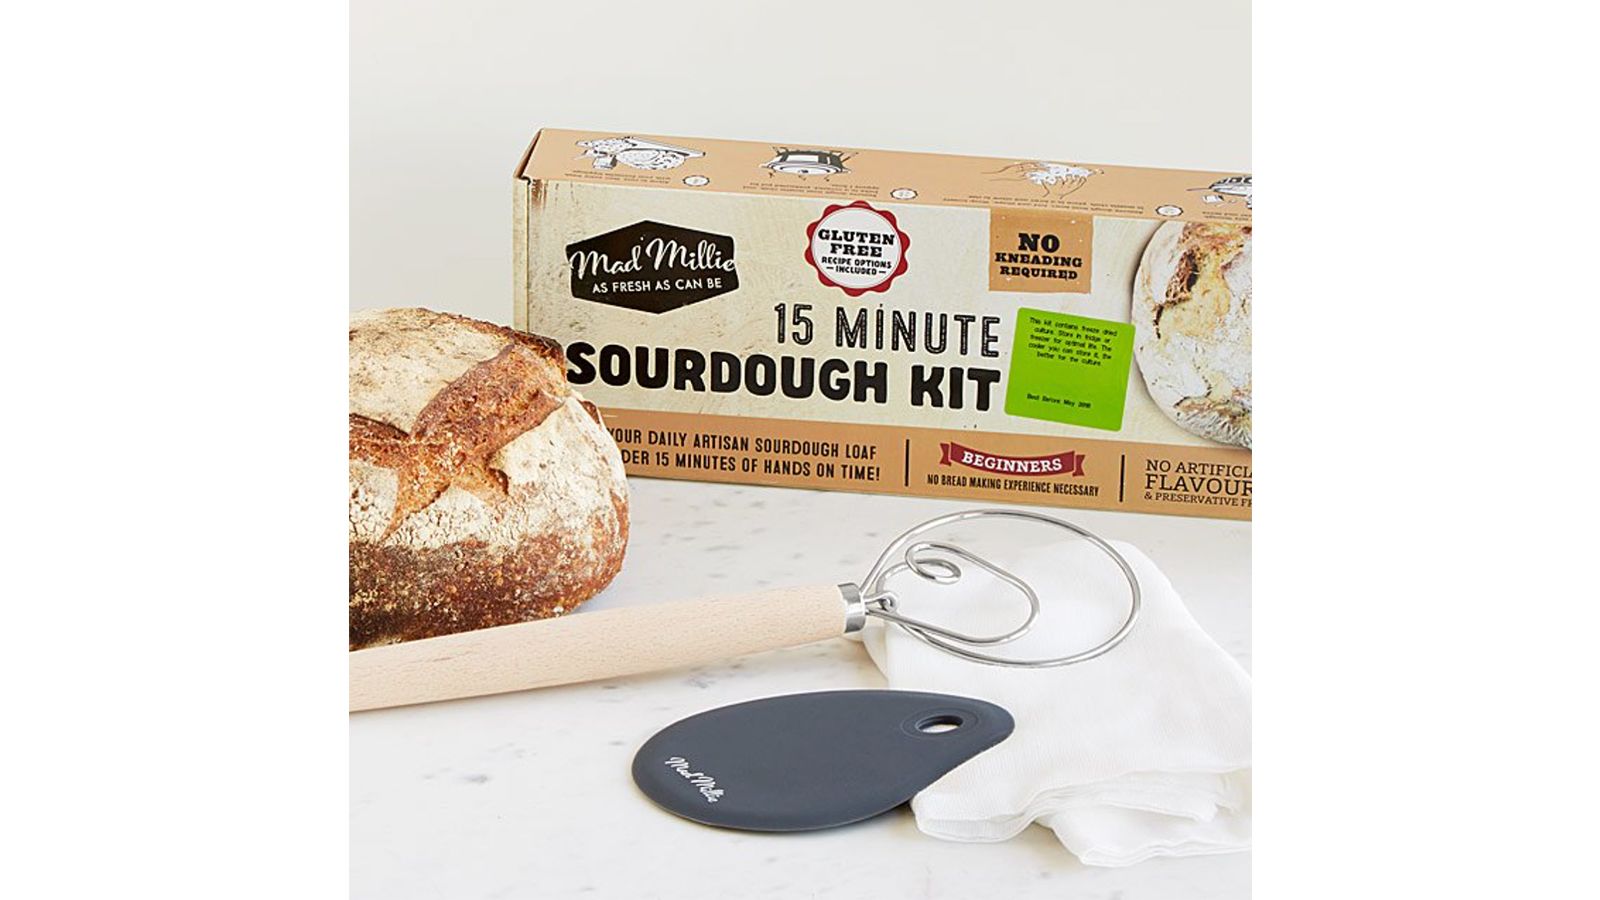 https://media.cnn.com/api/v1/images/stellar/prod/210928101139-baking-tools-maid-millie-homemade-sourdough-bread-kit.jpg?q=w_1600,h_900,x_0,y_0,c_fill